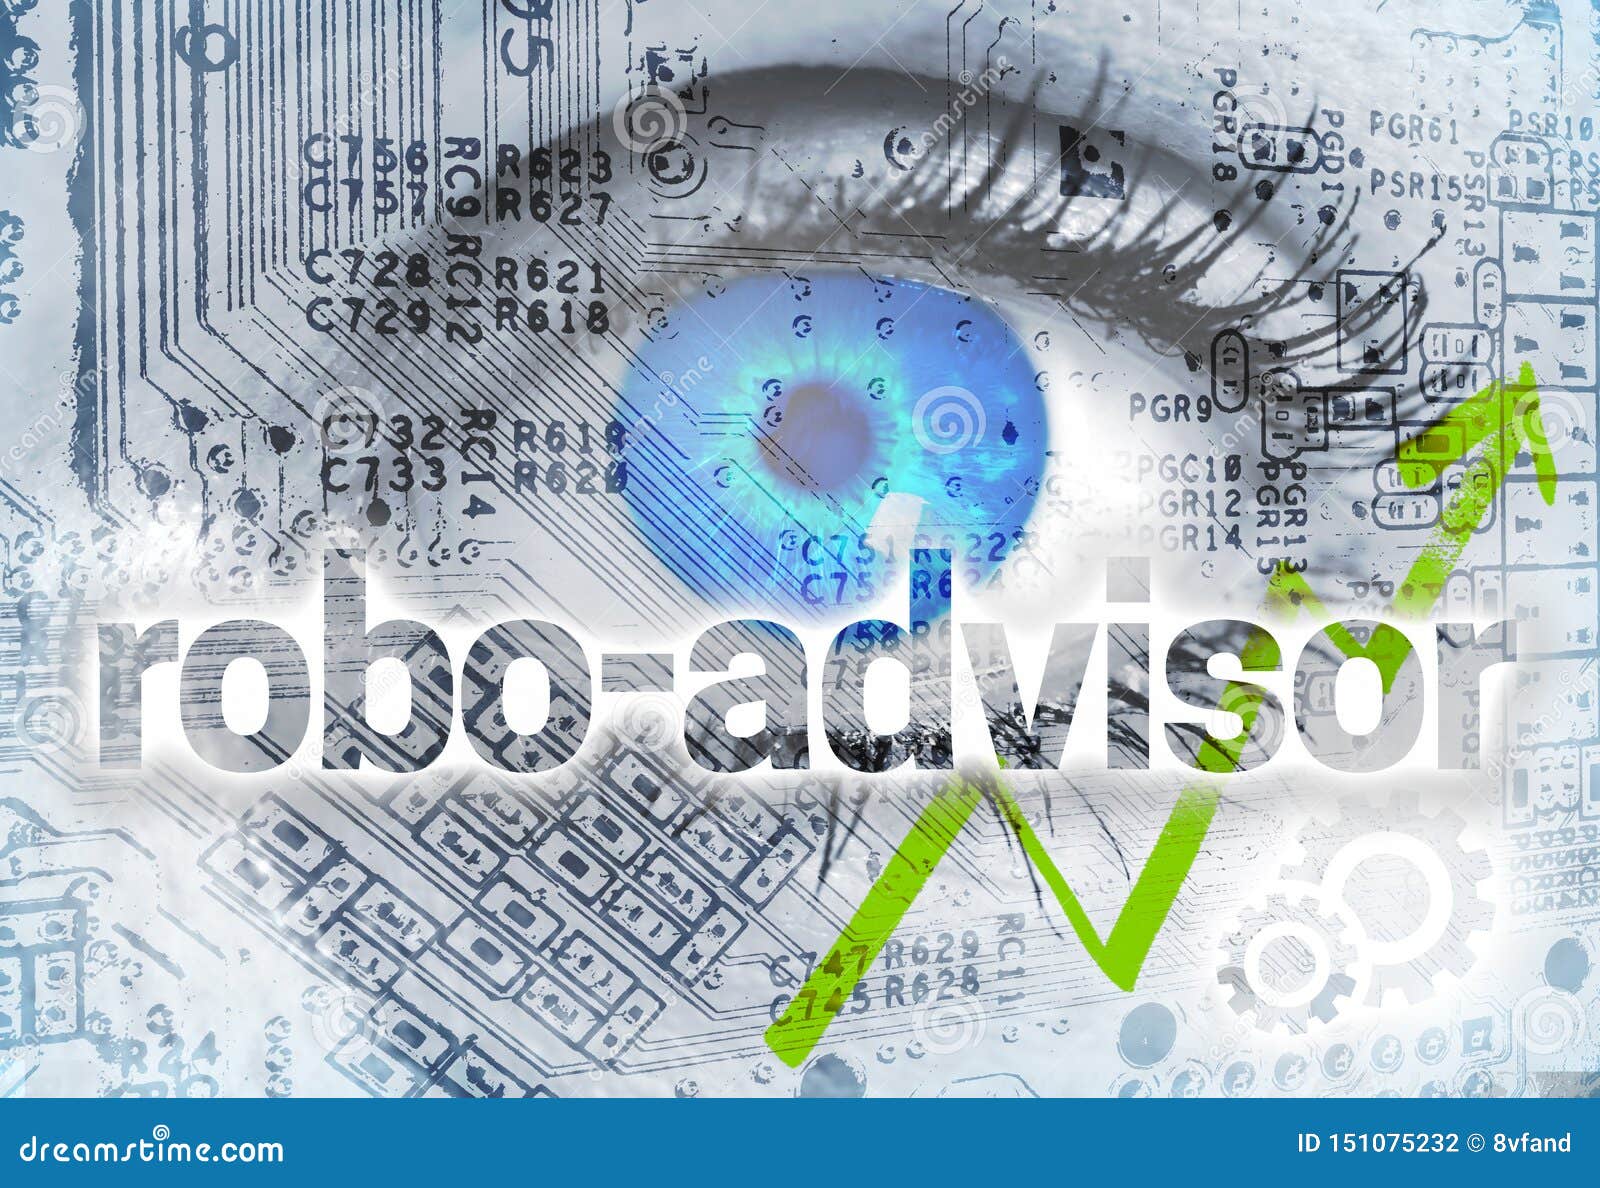 robo-advisor concept background with eye